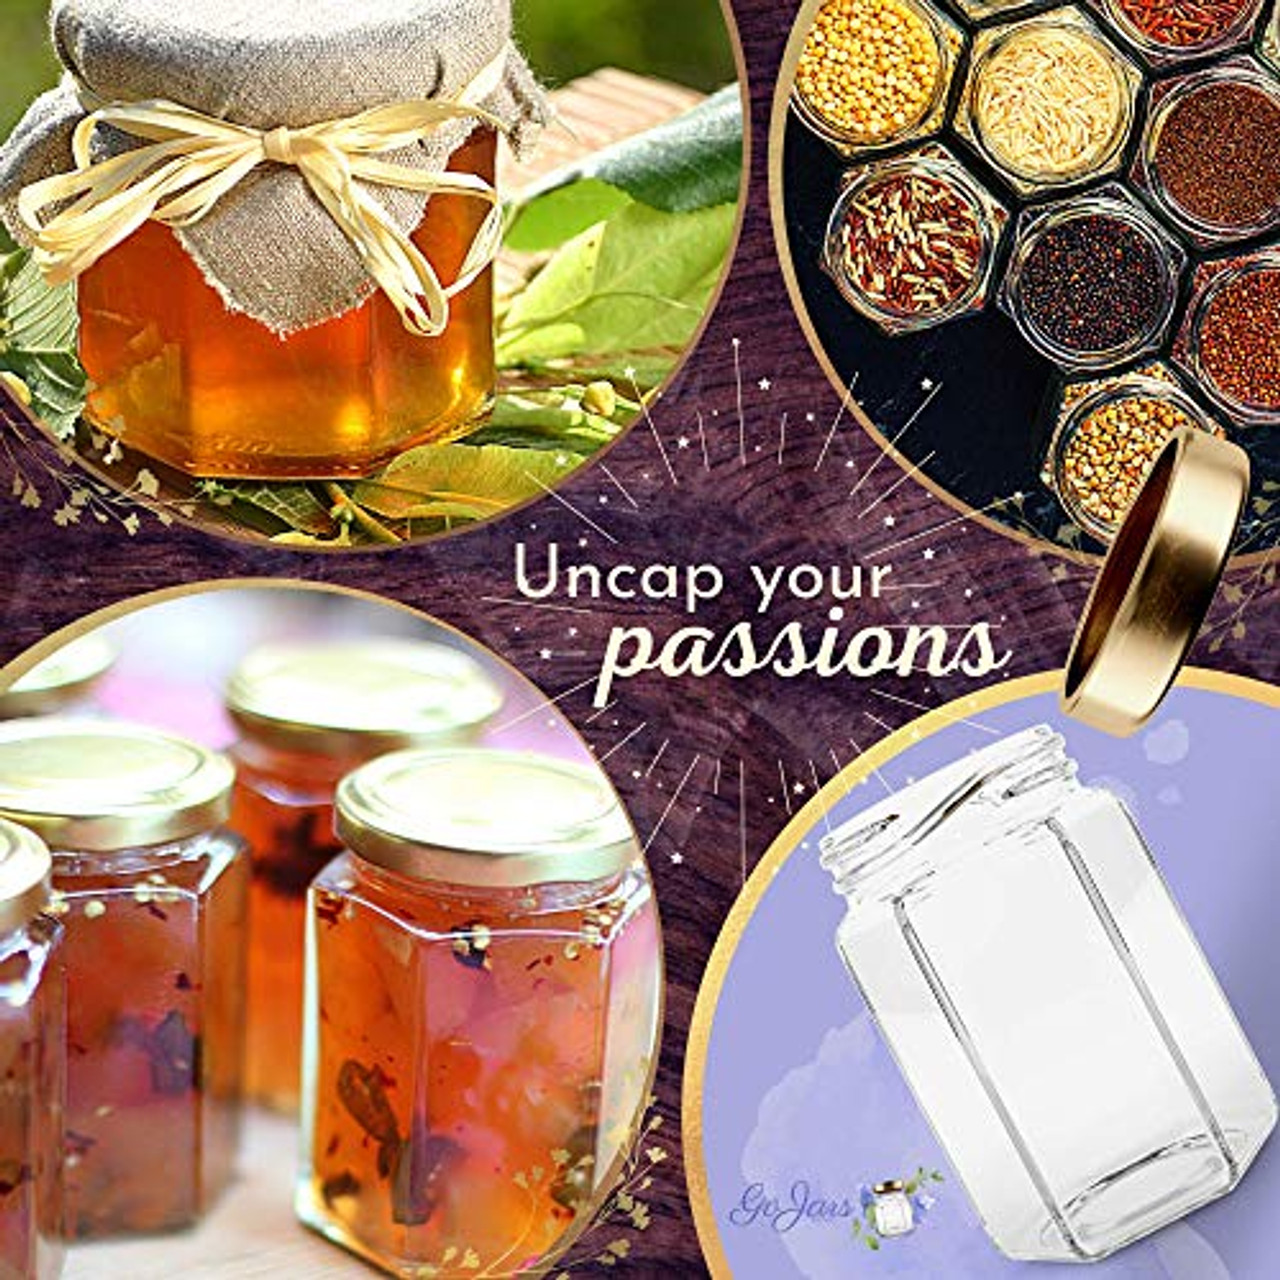 6Oz Glass Jars with Lids,Spice Jars,Small Mason Jars Regular Mouth,Mini  Canning